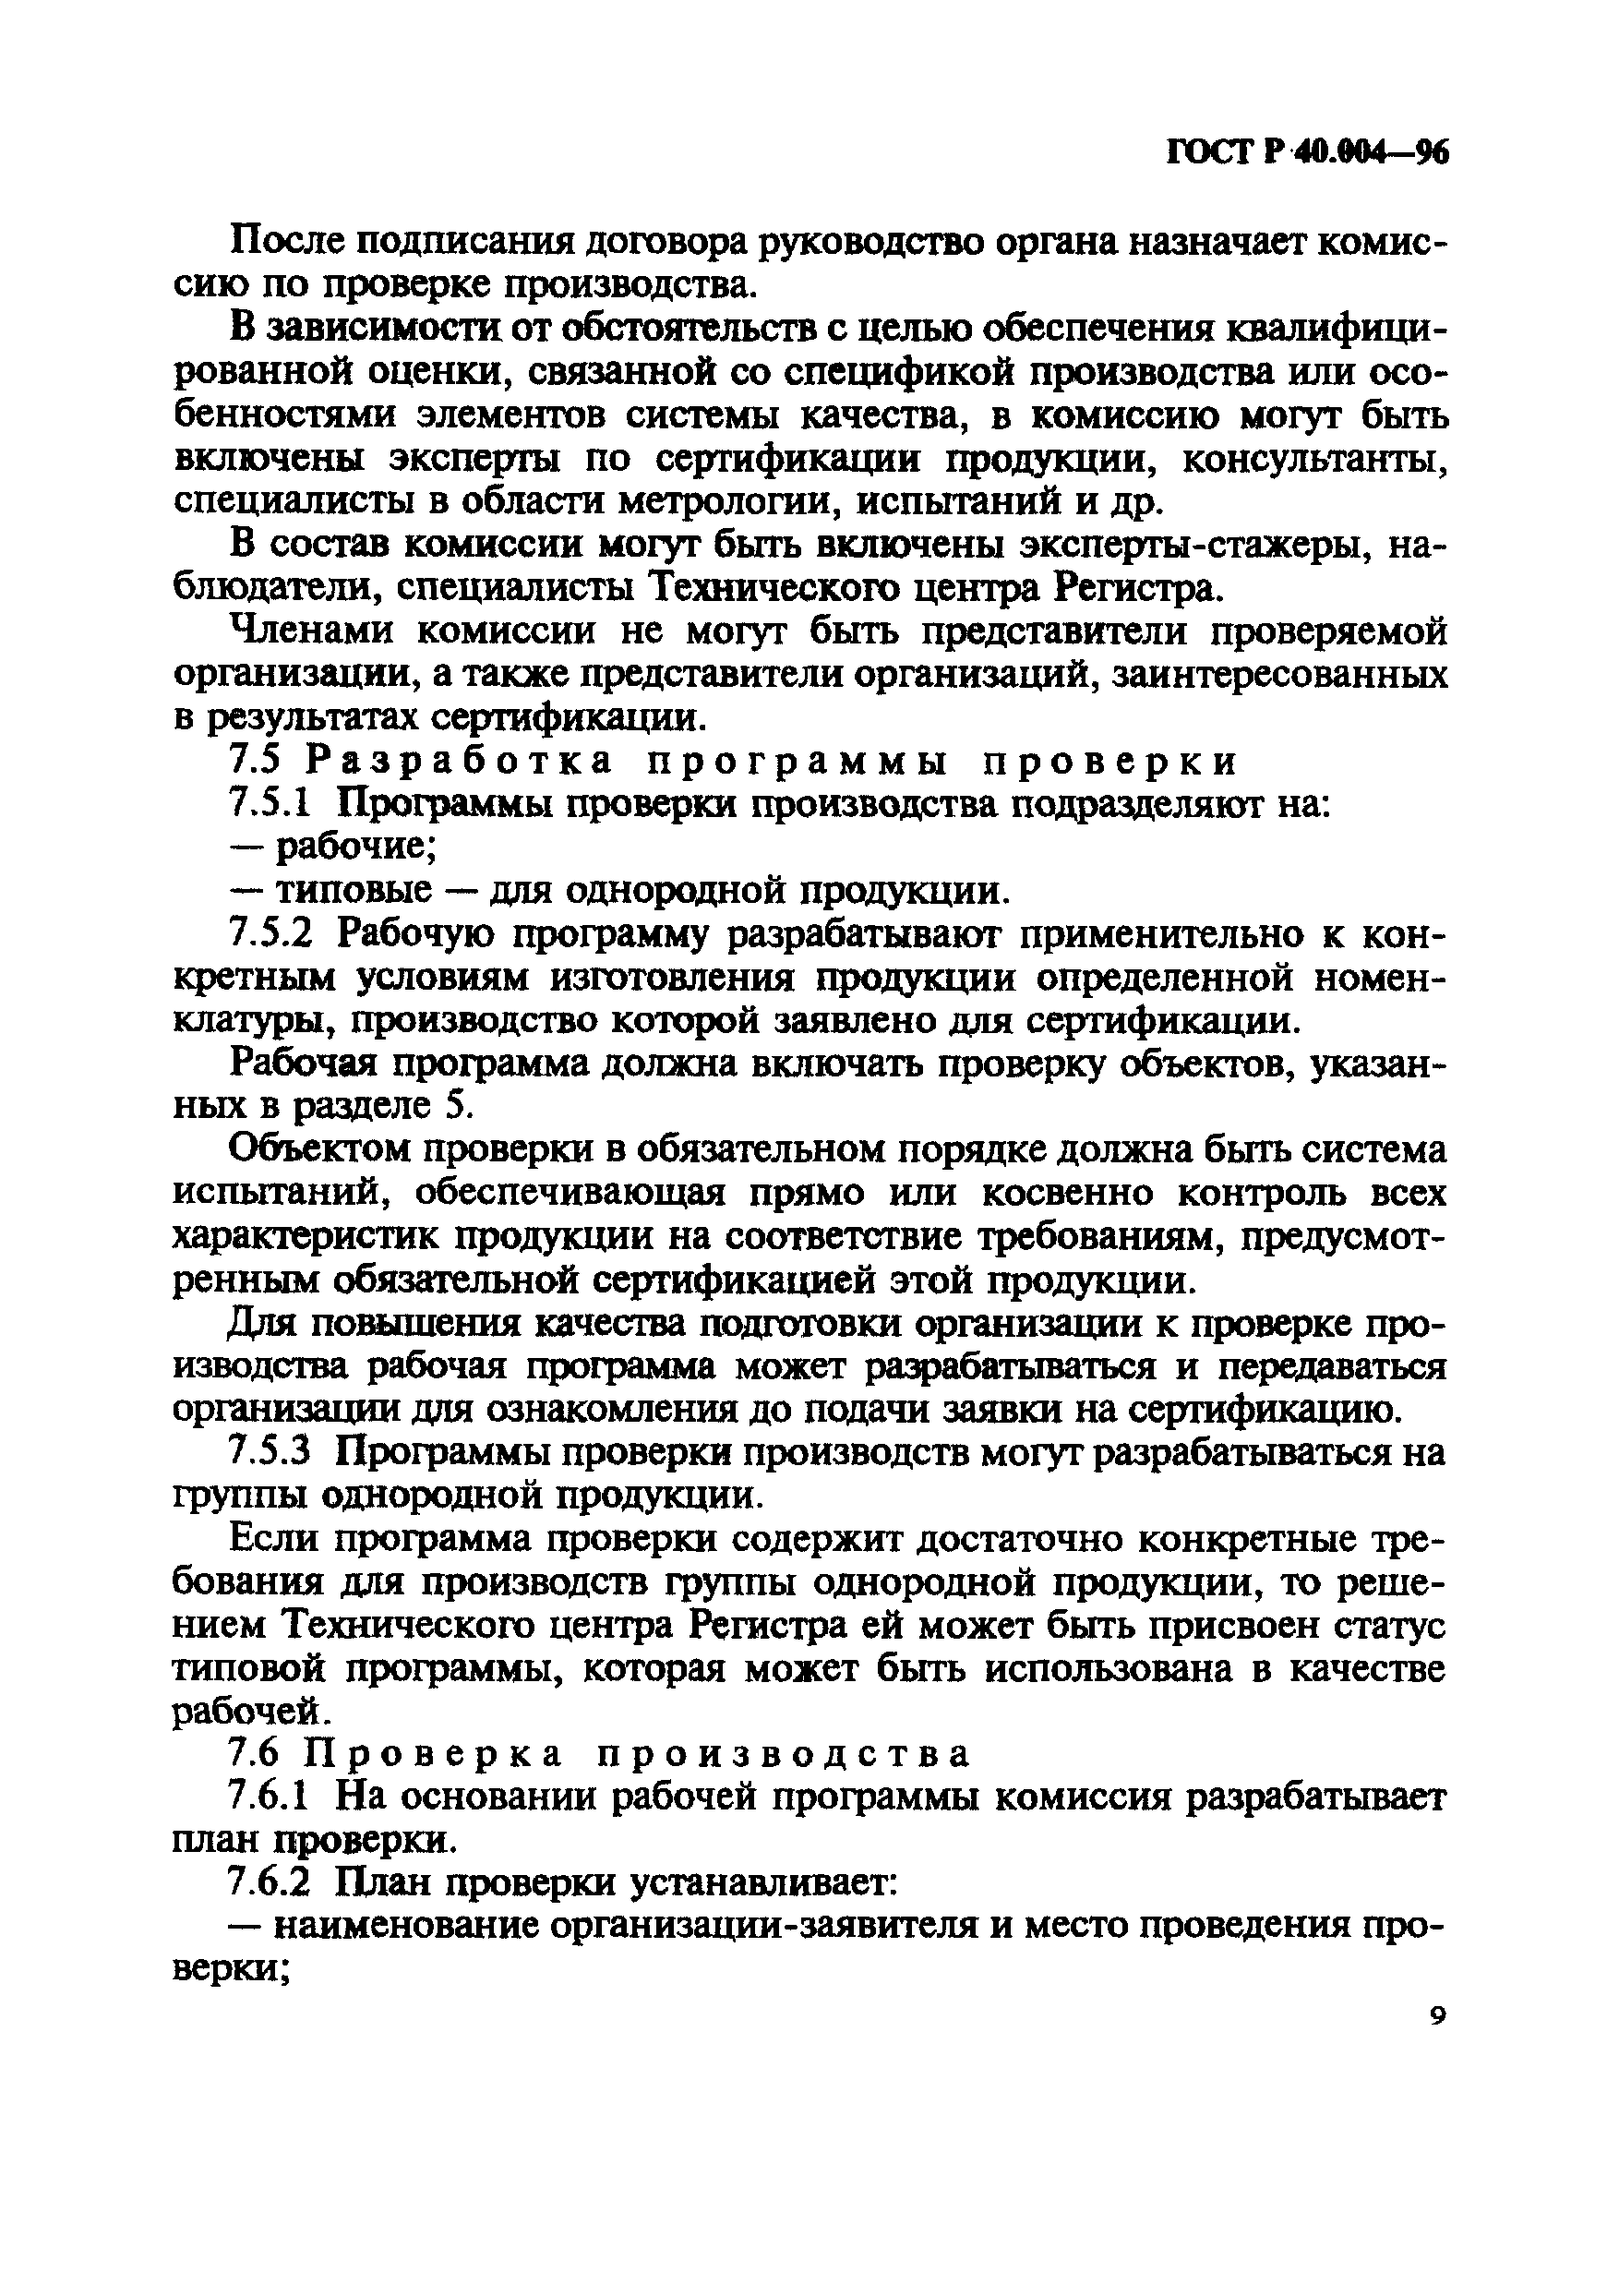 ГОСТ Р 40.004-96